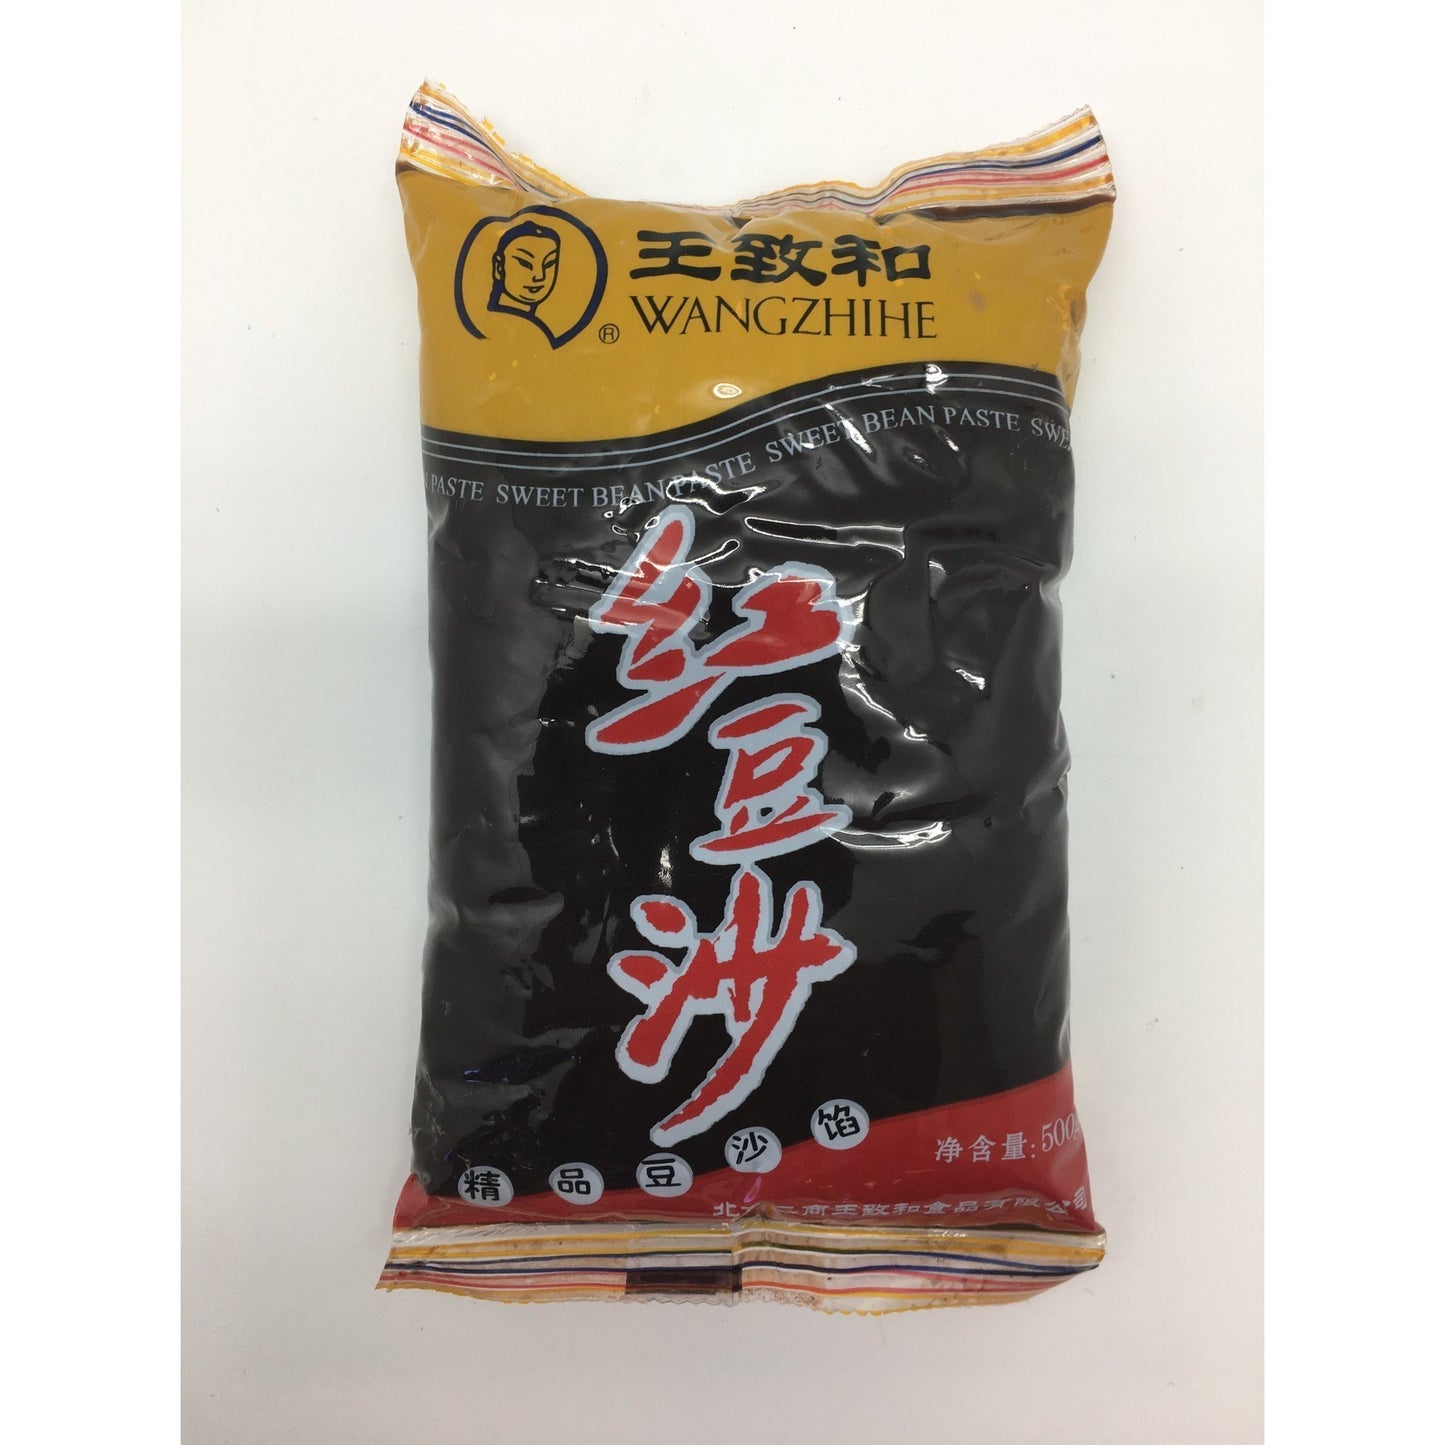 PD059 WangZhiHe brand  - Sweet Red Bean Paste 500g -  20 bags / 1CTN - New Eastland Pty Ltd - Asian food wholesalers